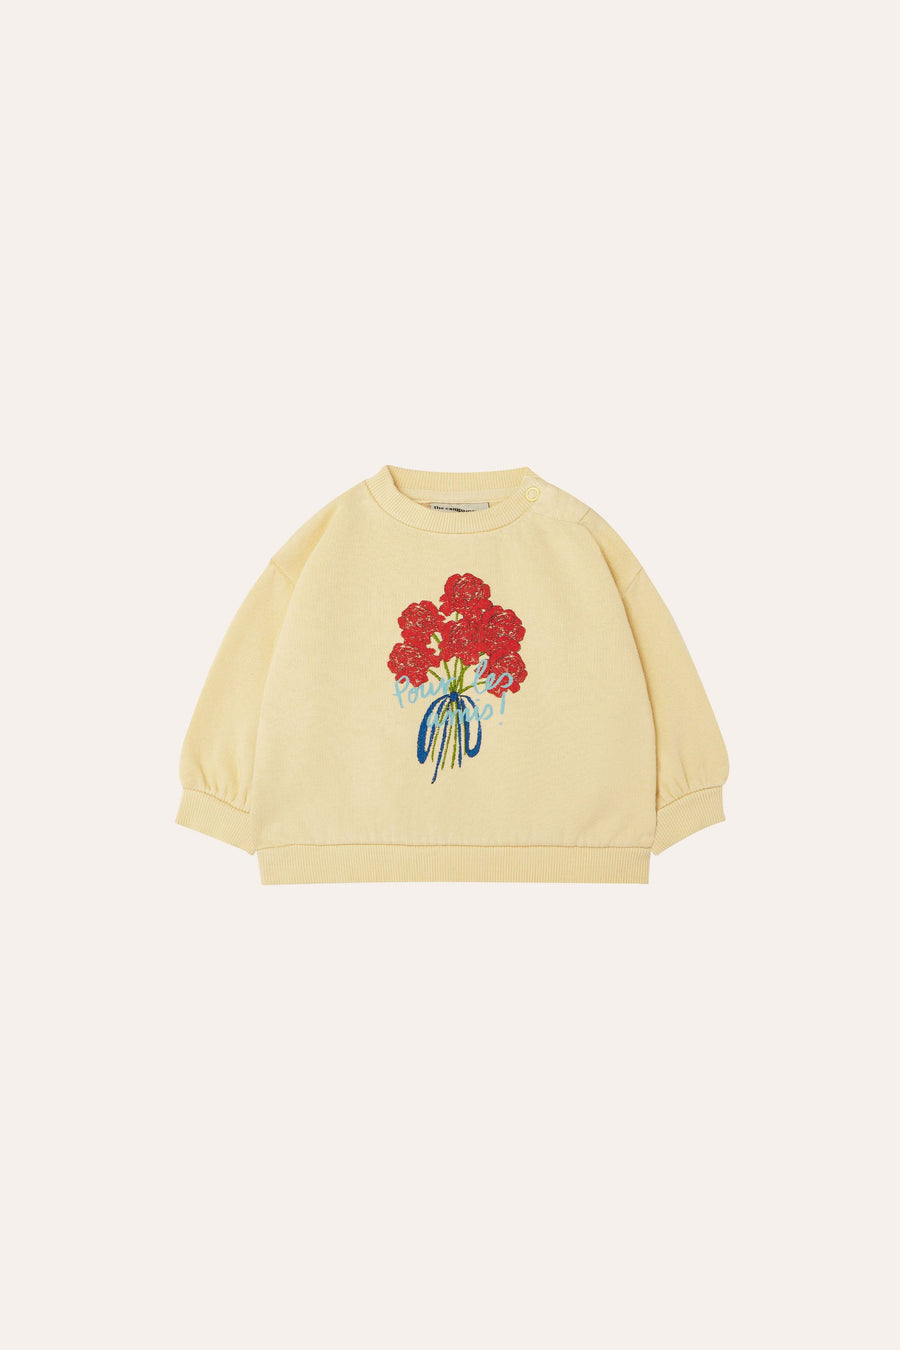 The Campamento - flowers bouquet baby sweatshirt